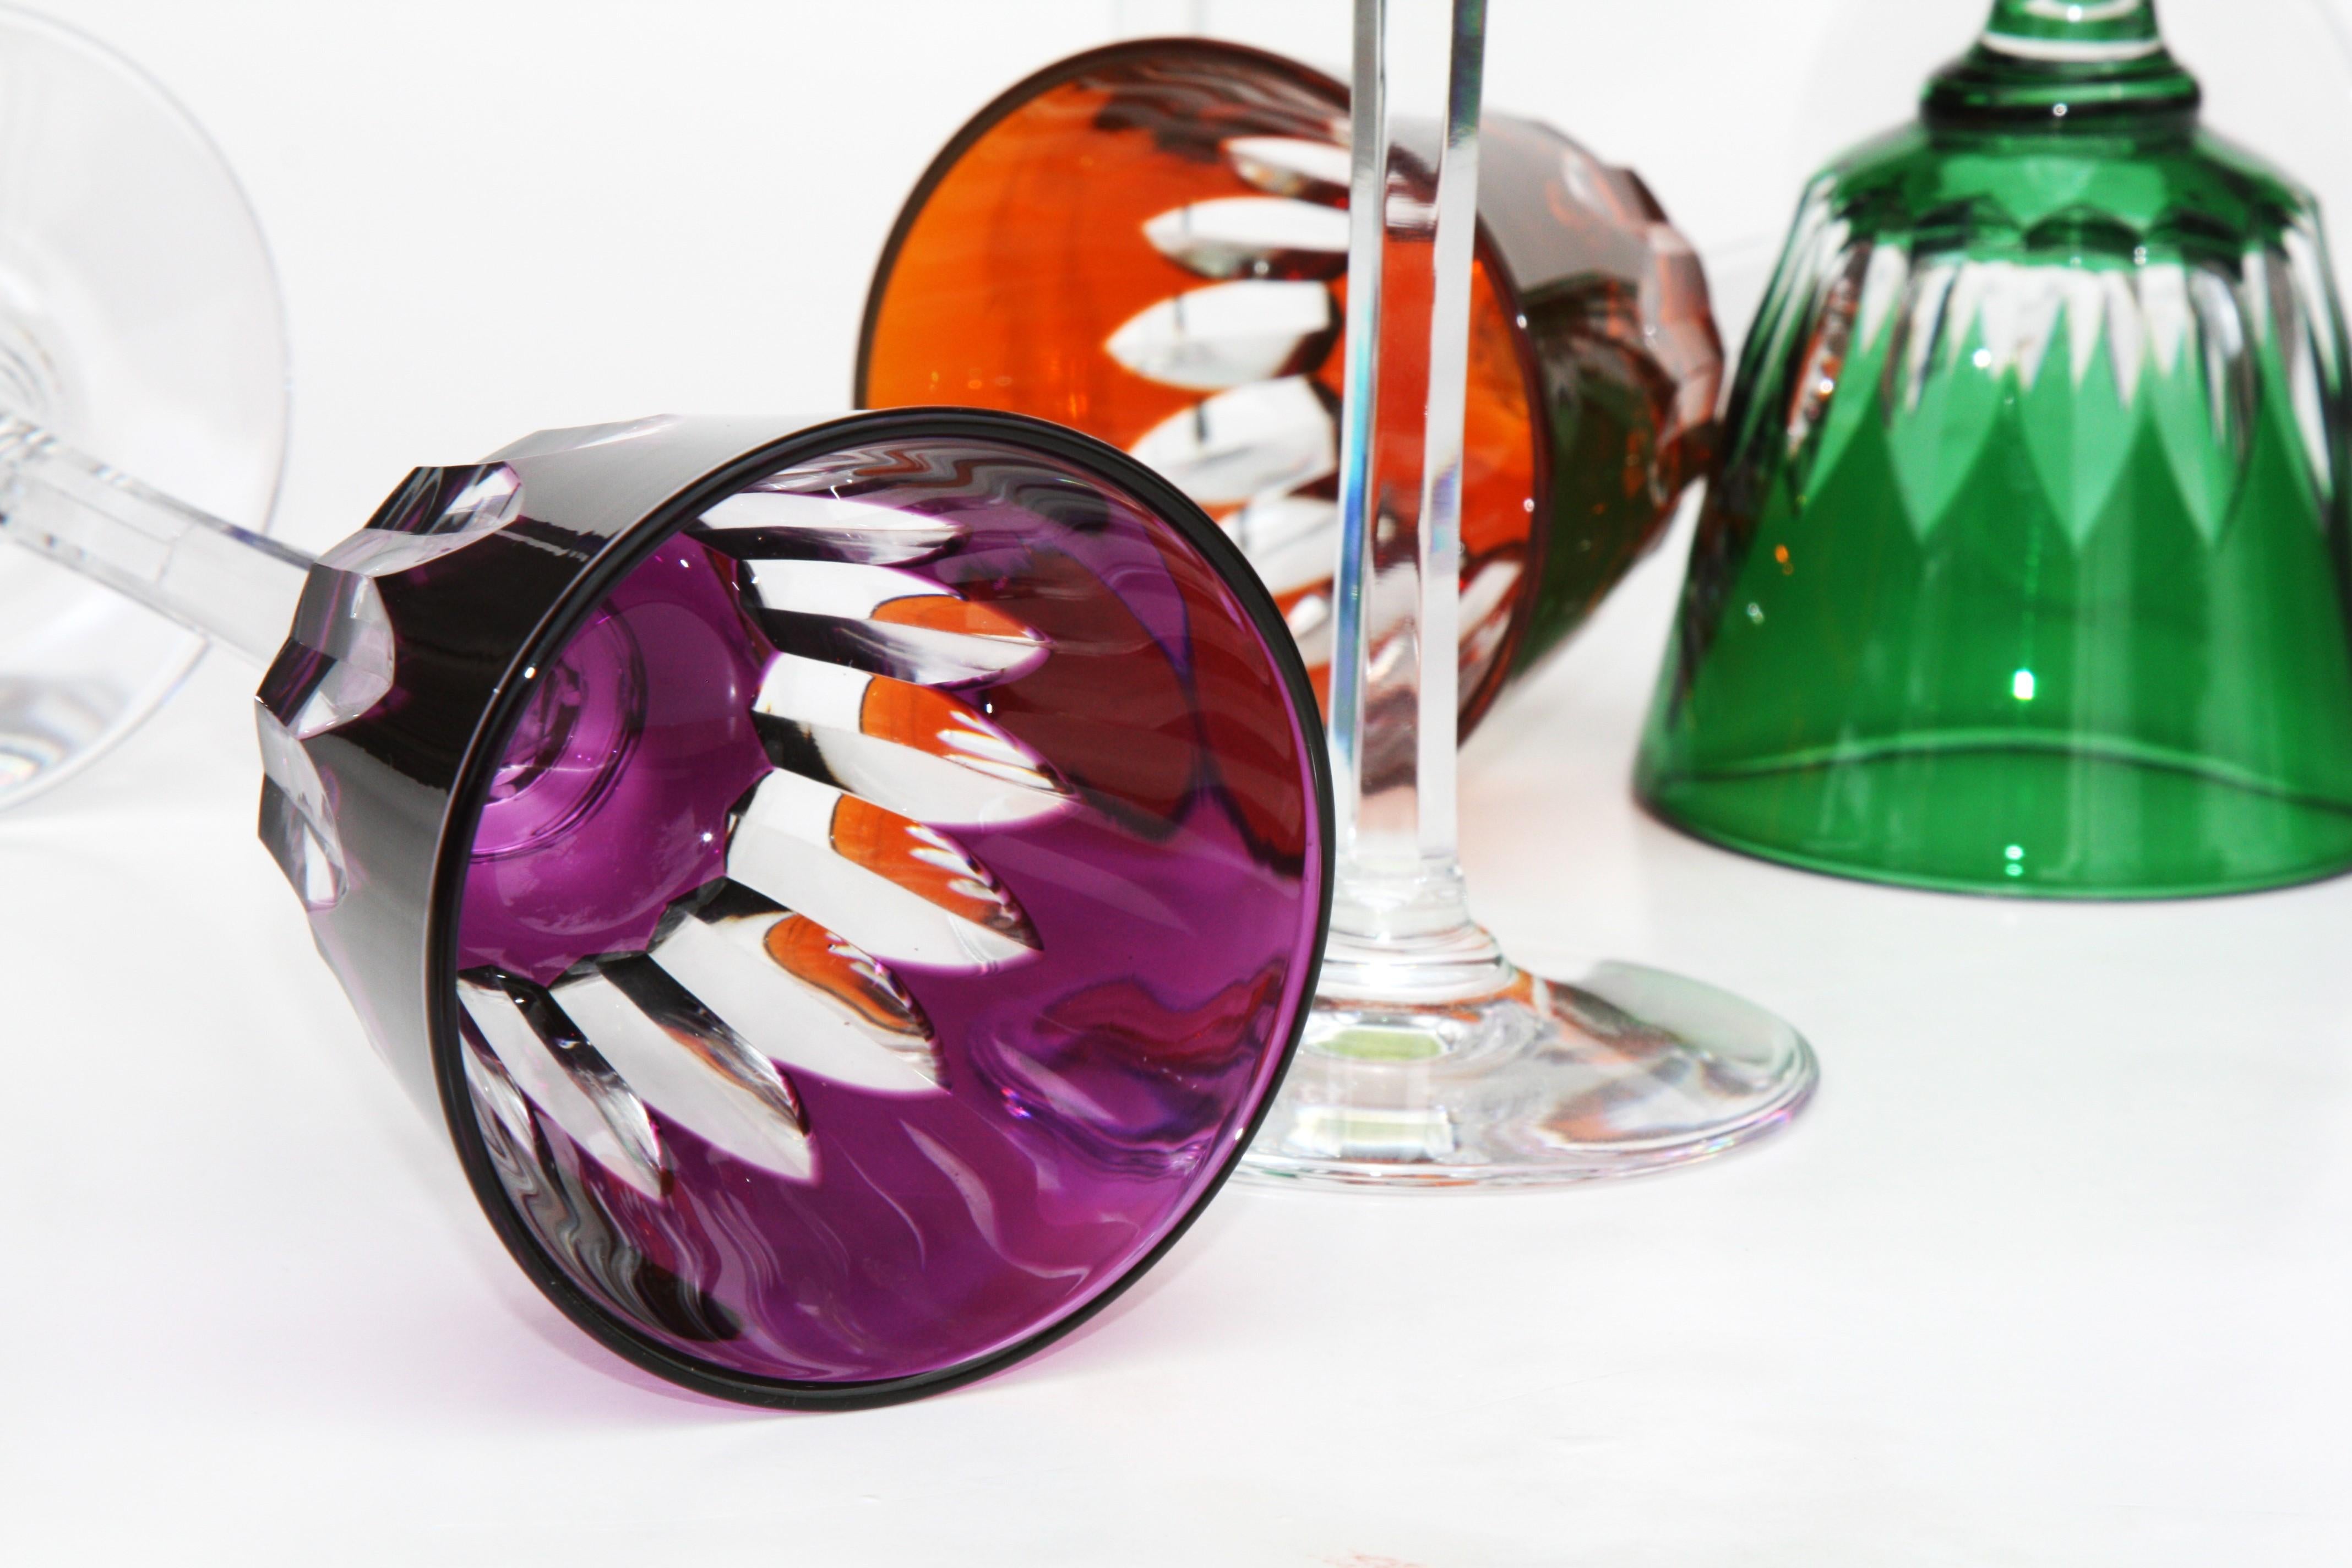 Crystal Set of 6 Roemer glasses in Baccarat crystal, Lavandou model